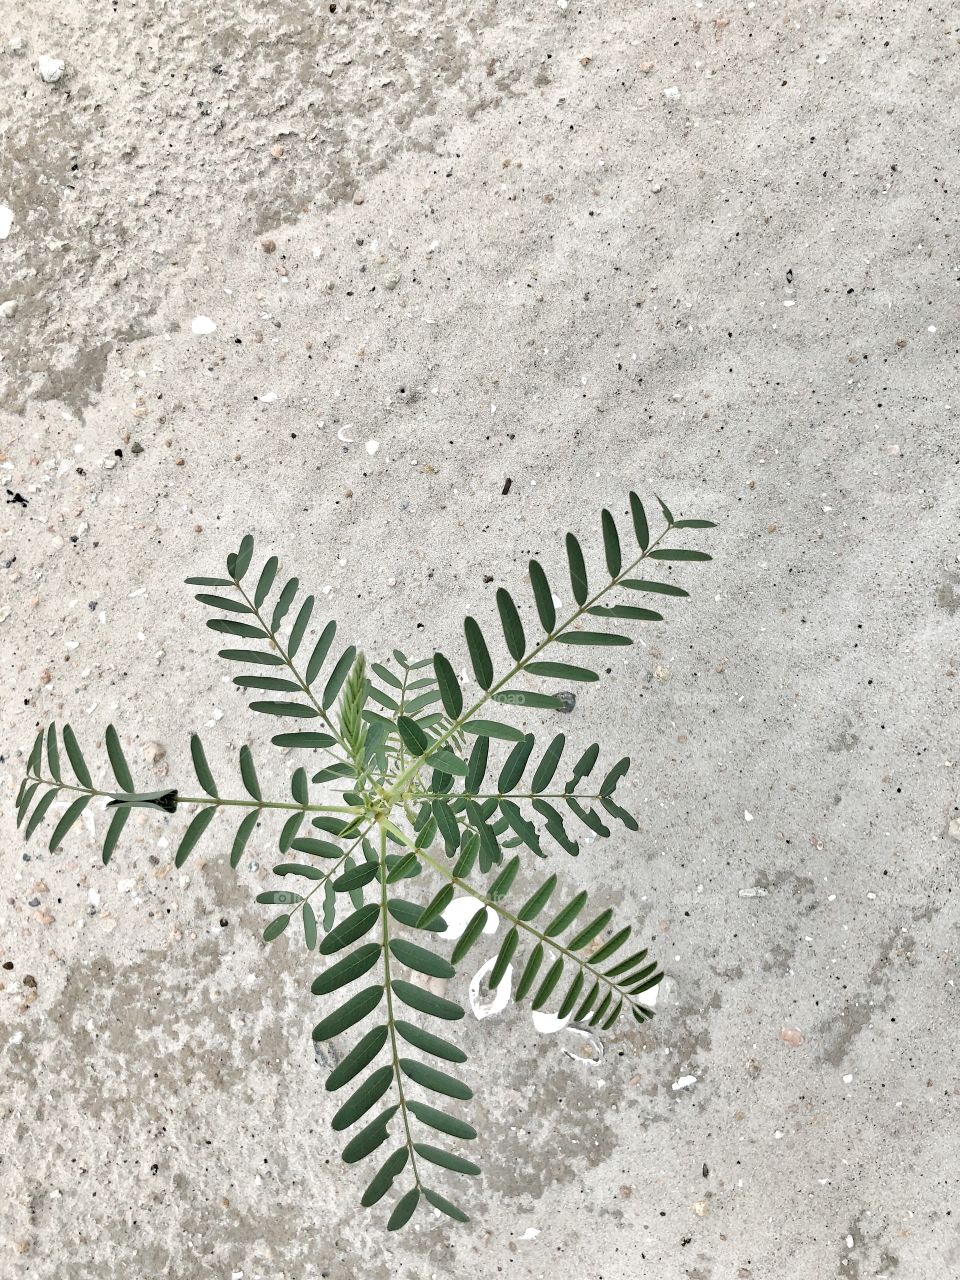 Plan view of plant on sandy terrain 